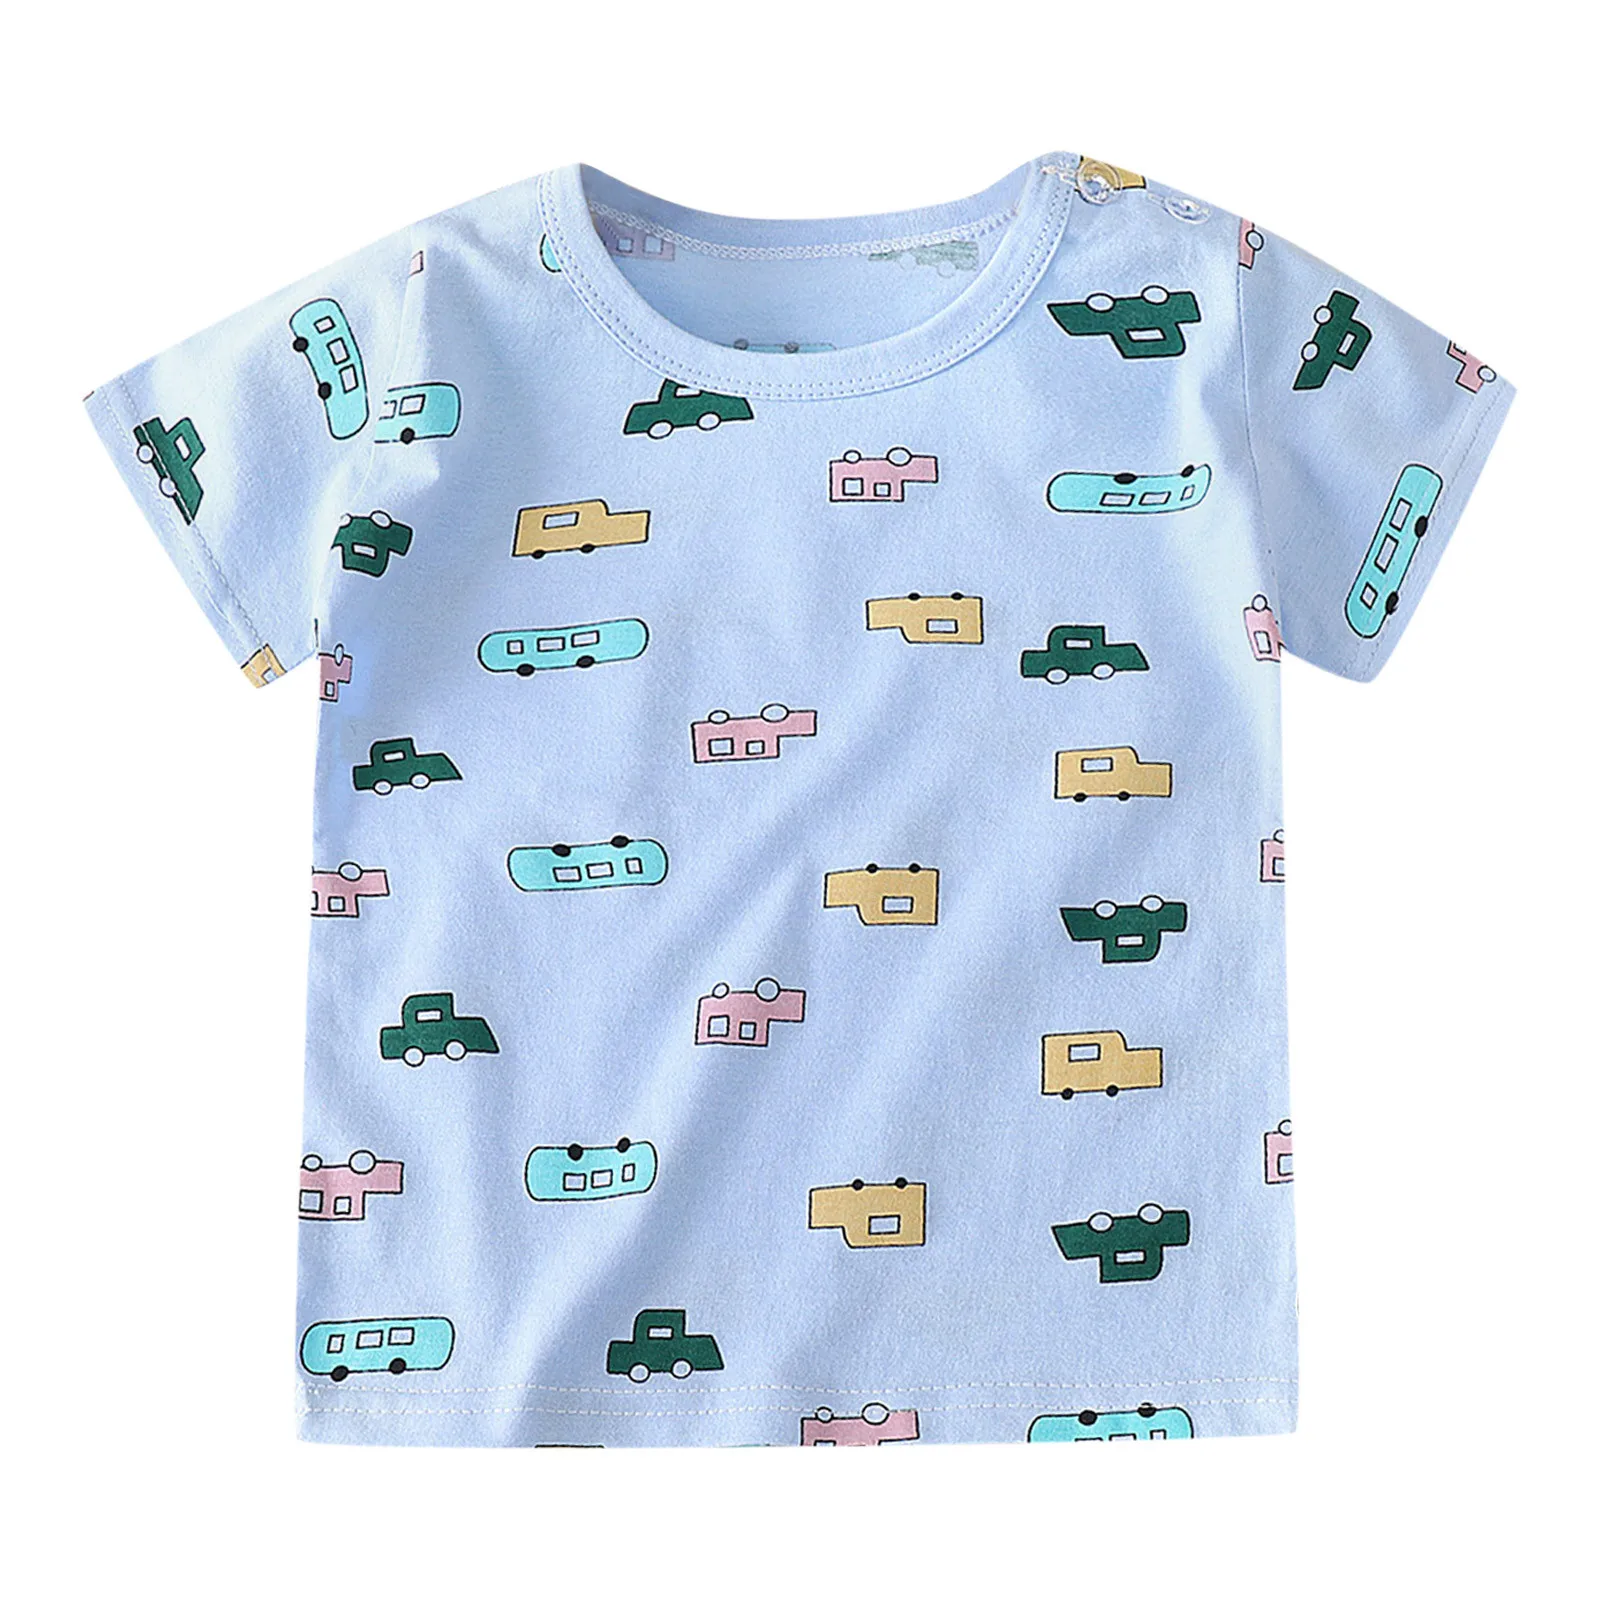 

Toddler Shirt Short Sleeve Boys Girls Cartoon Car Strawberry Love Prints Shirt Tops Outwear Youth T Shirt